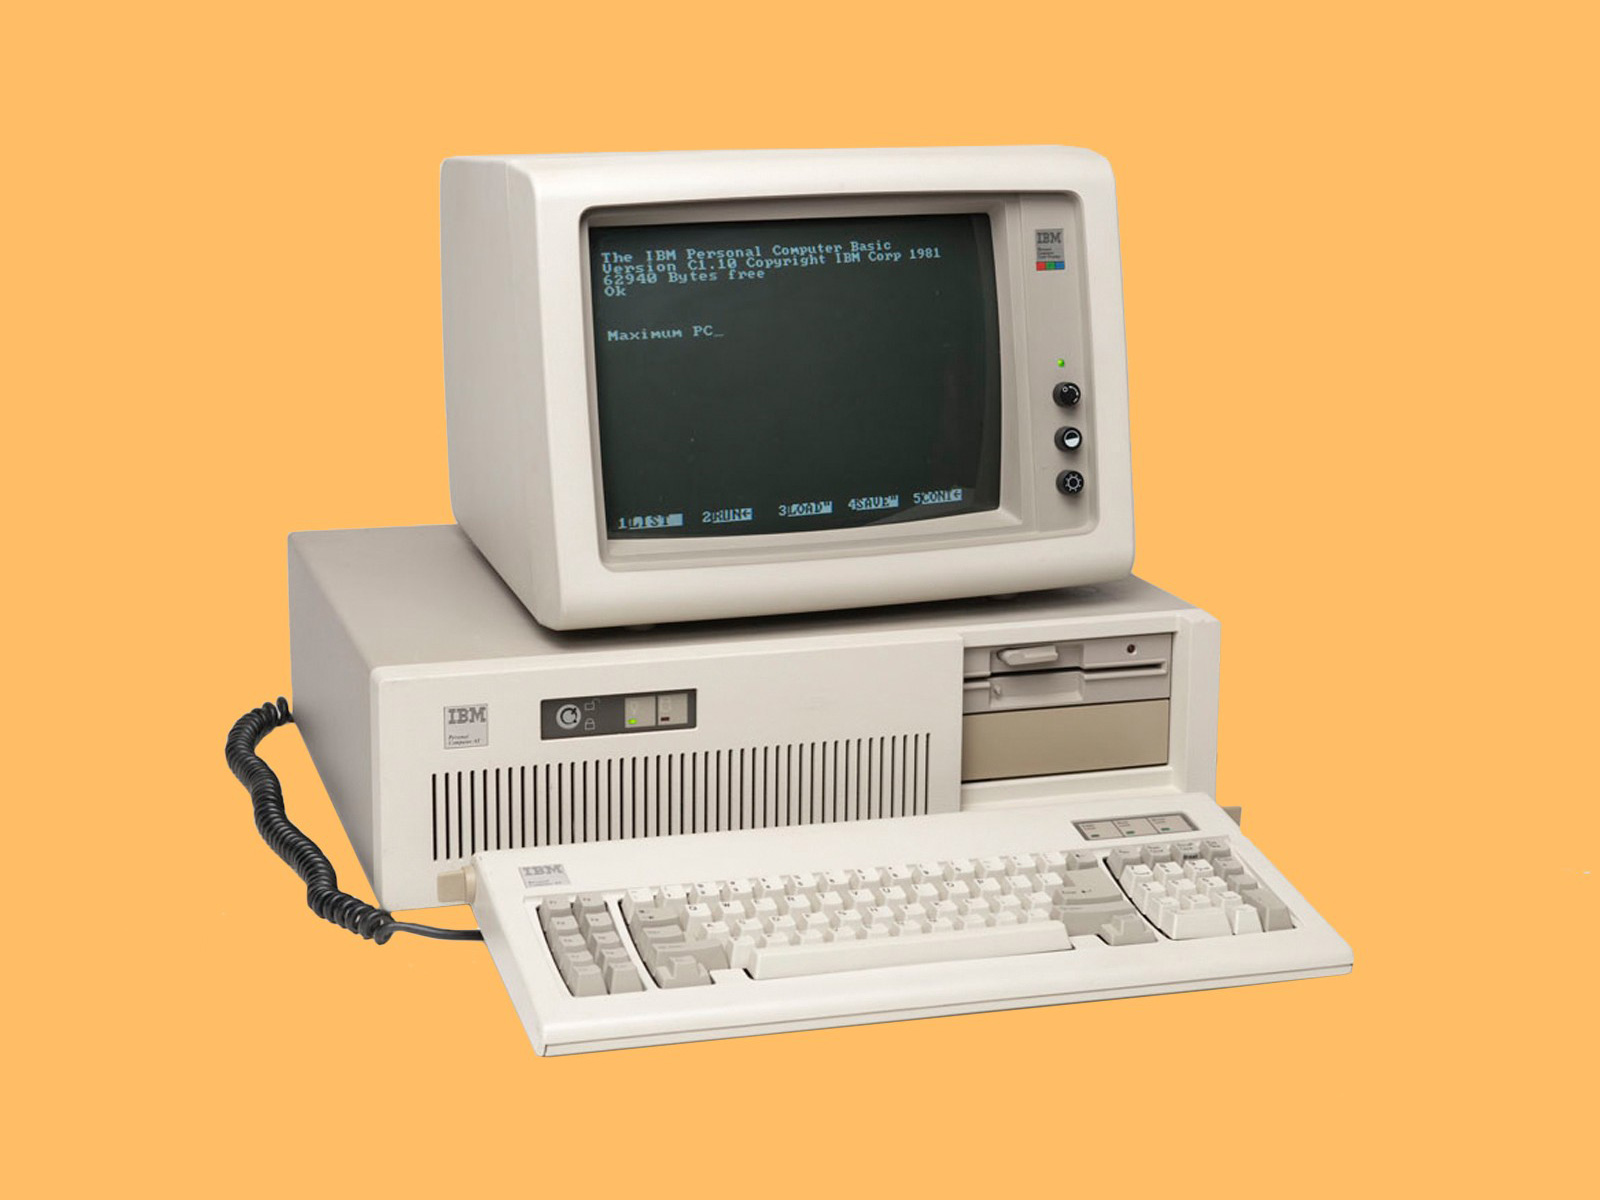 IBM PC AT 286